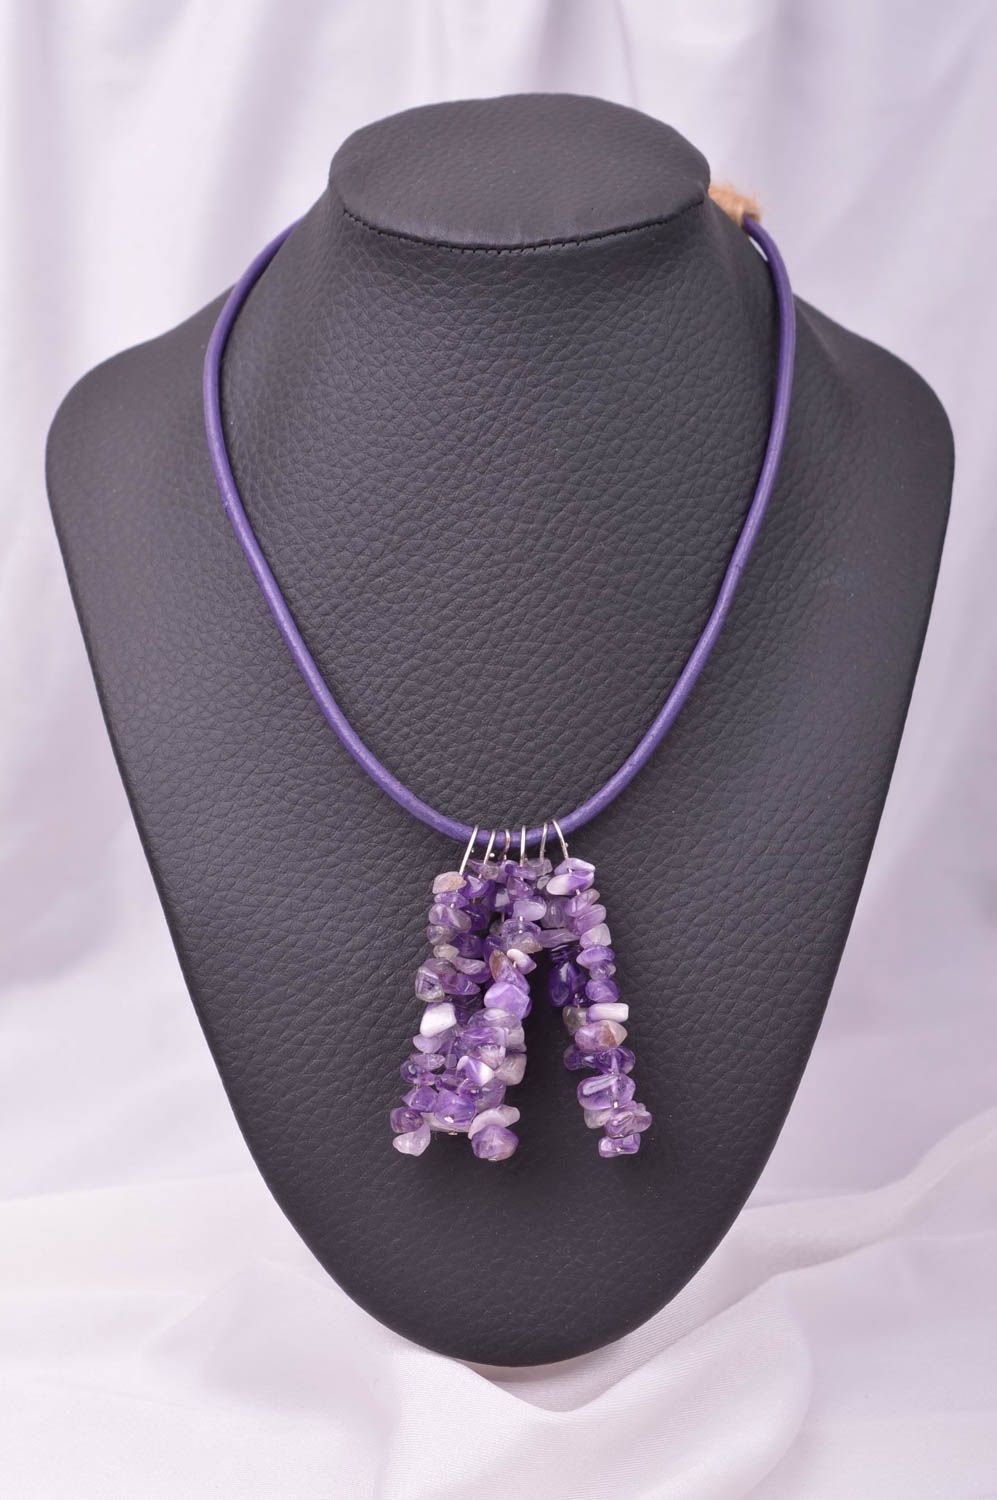 Unusual handmade gemstone necklace leather necklace textile necklace gift ideas photo 1